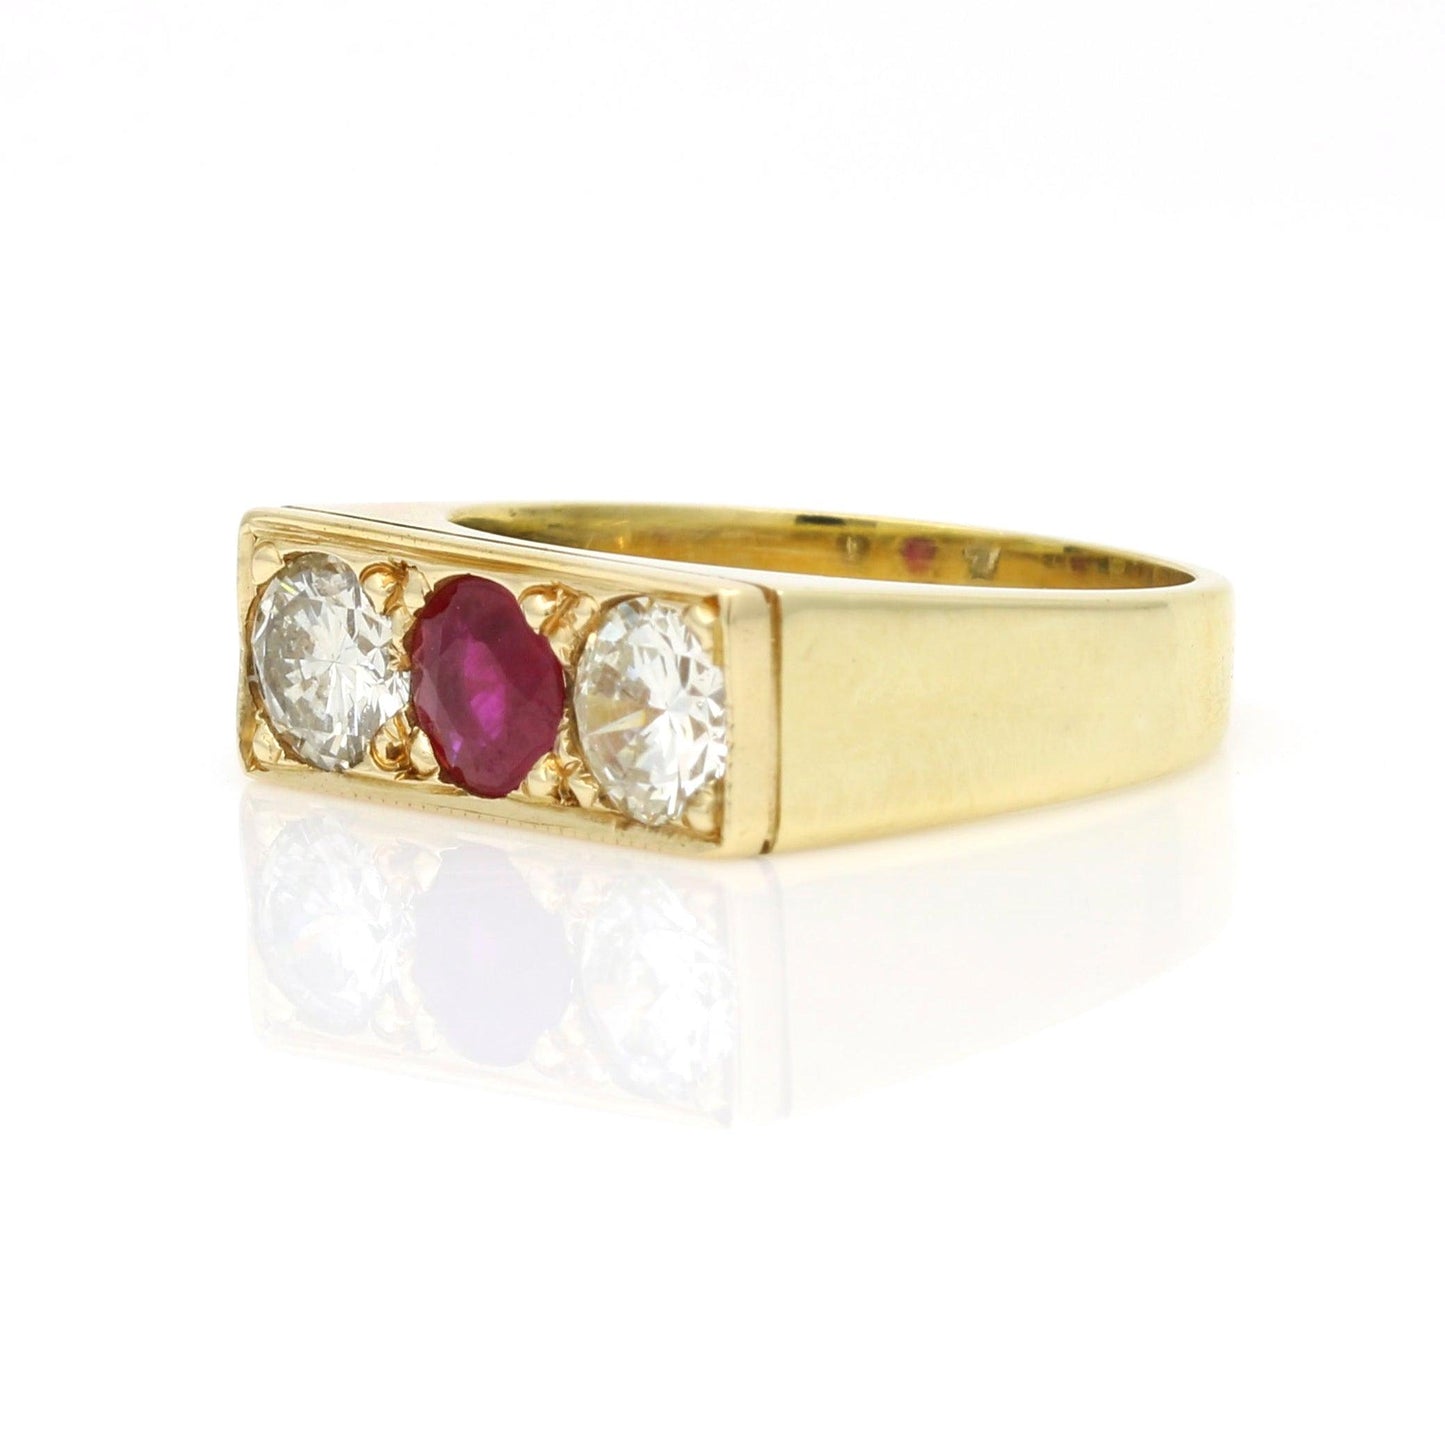 Women's Burma Ruby Diamond Vintage Statement Ring in 18k Gold 1.70 cttw - 31 Jewels Inc.